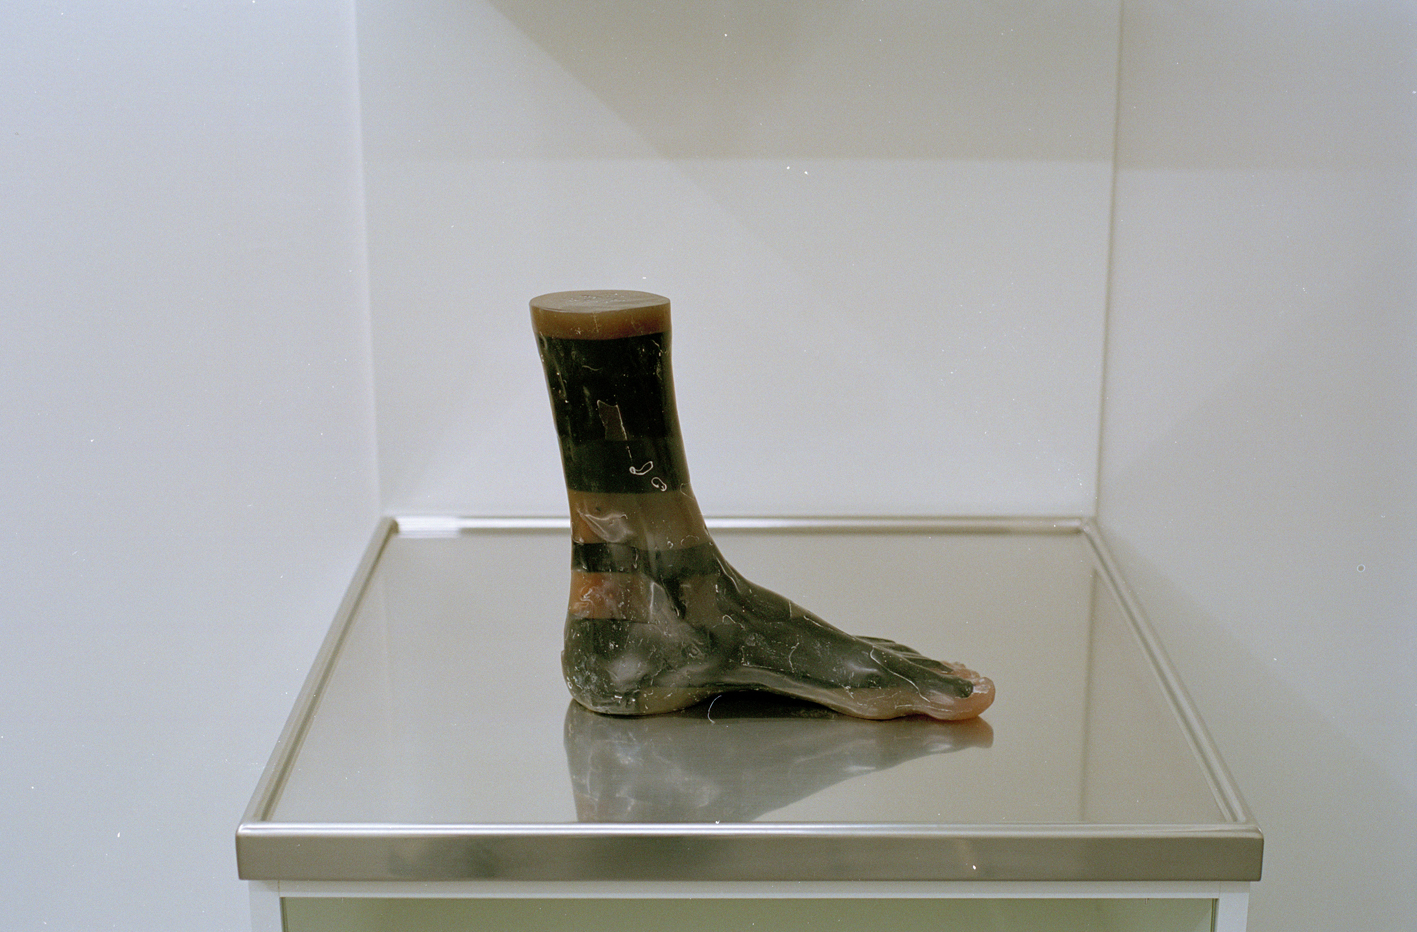 Sculpture of a foot